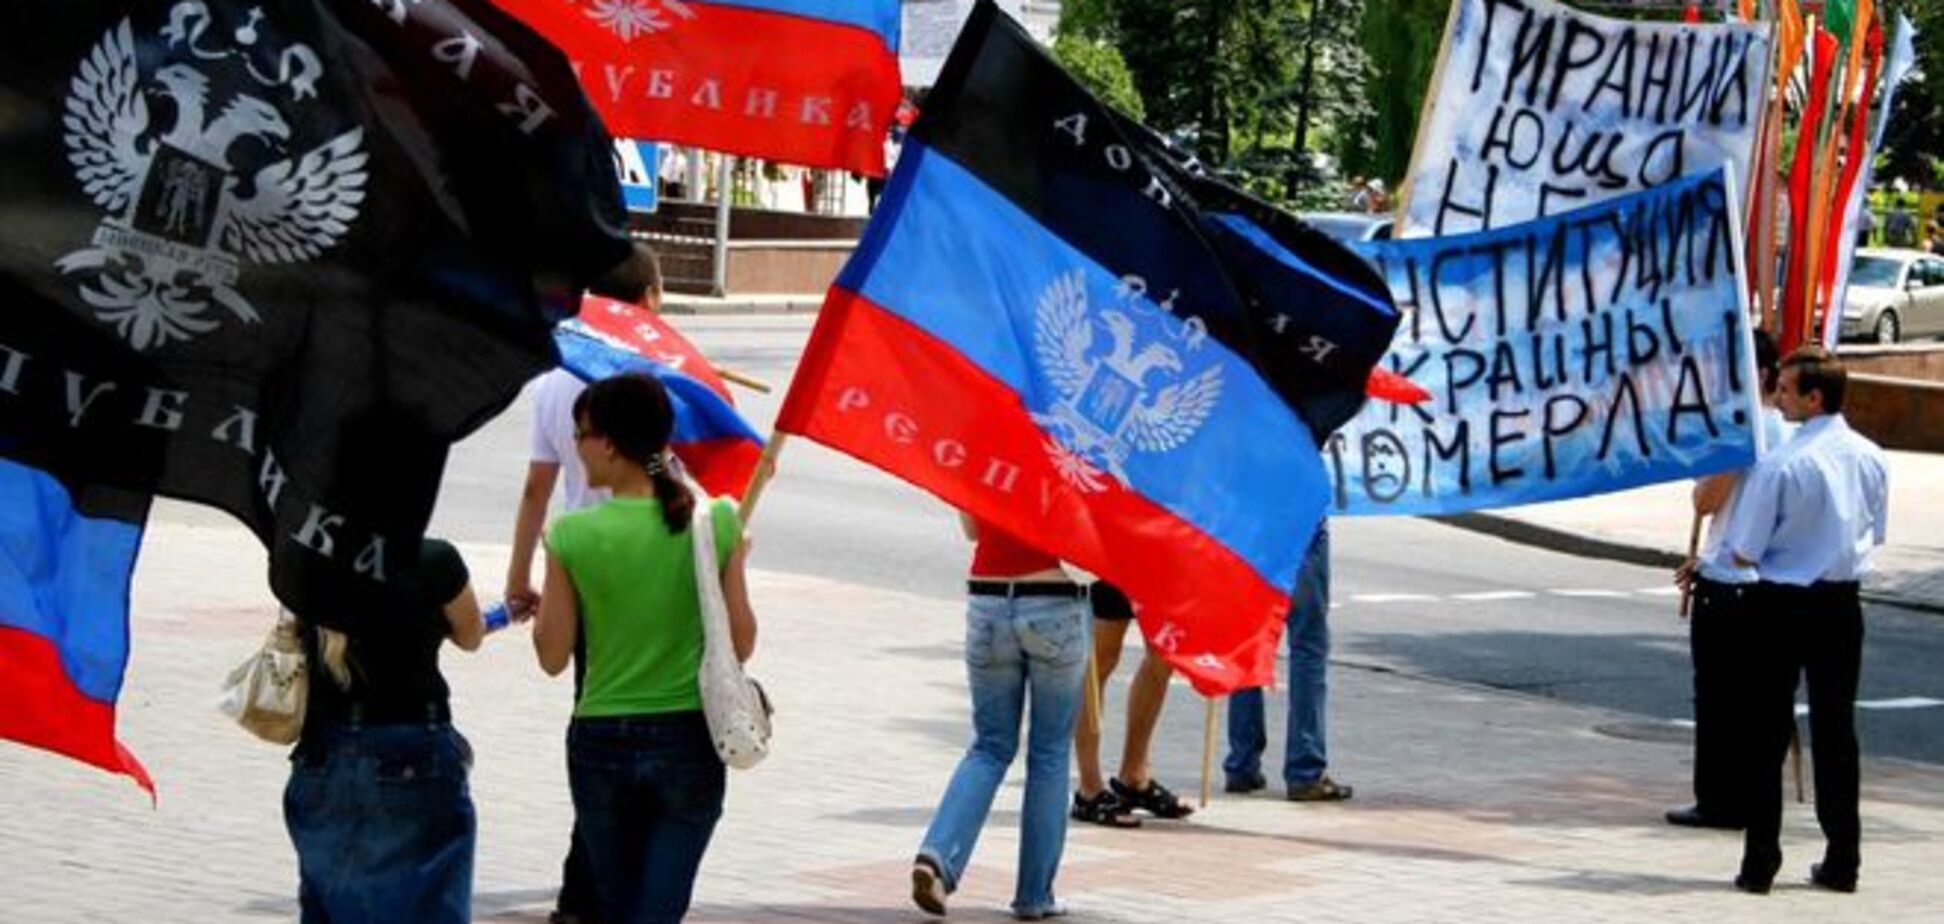 Флаги 'ДНР' появились в Донецке еще при Ющенко и Наливайченко: фотофакт